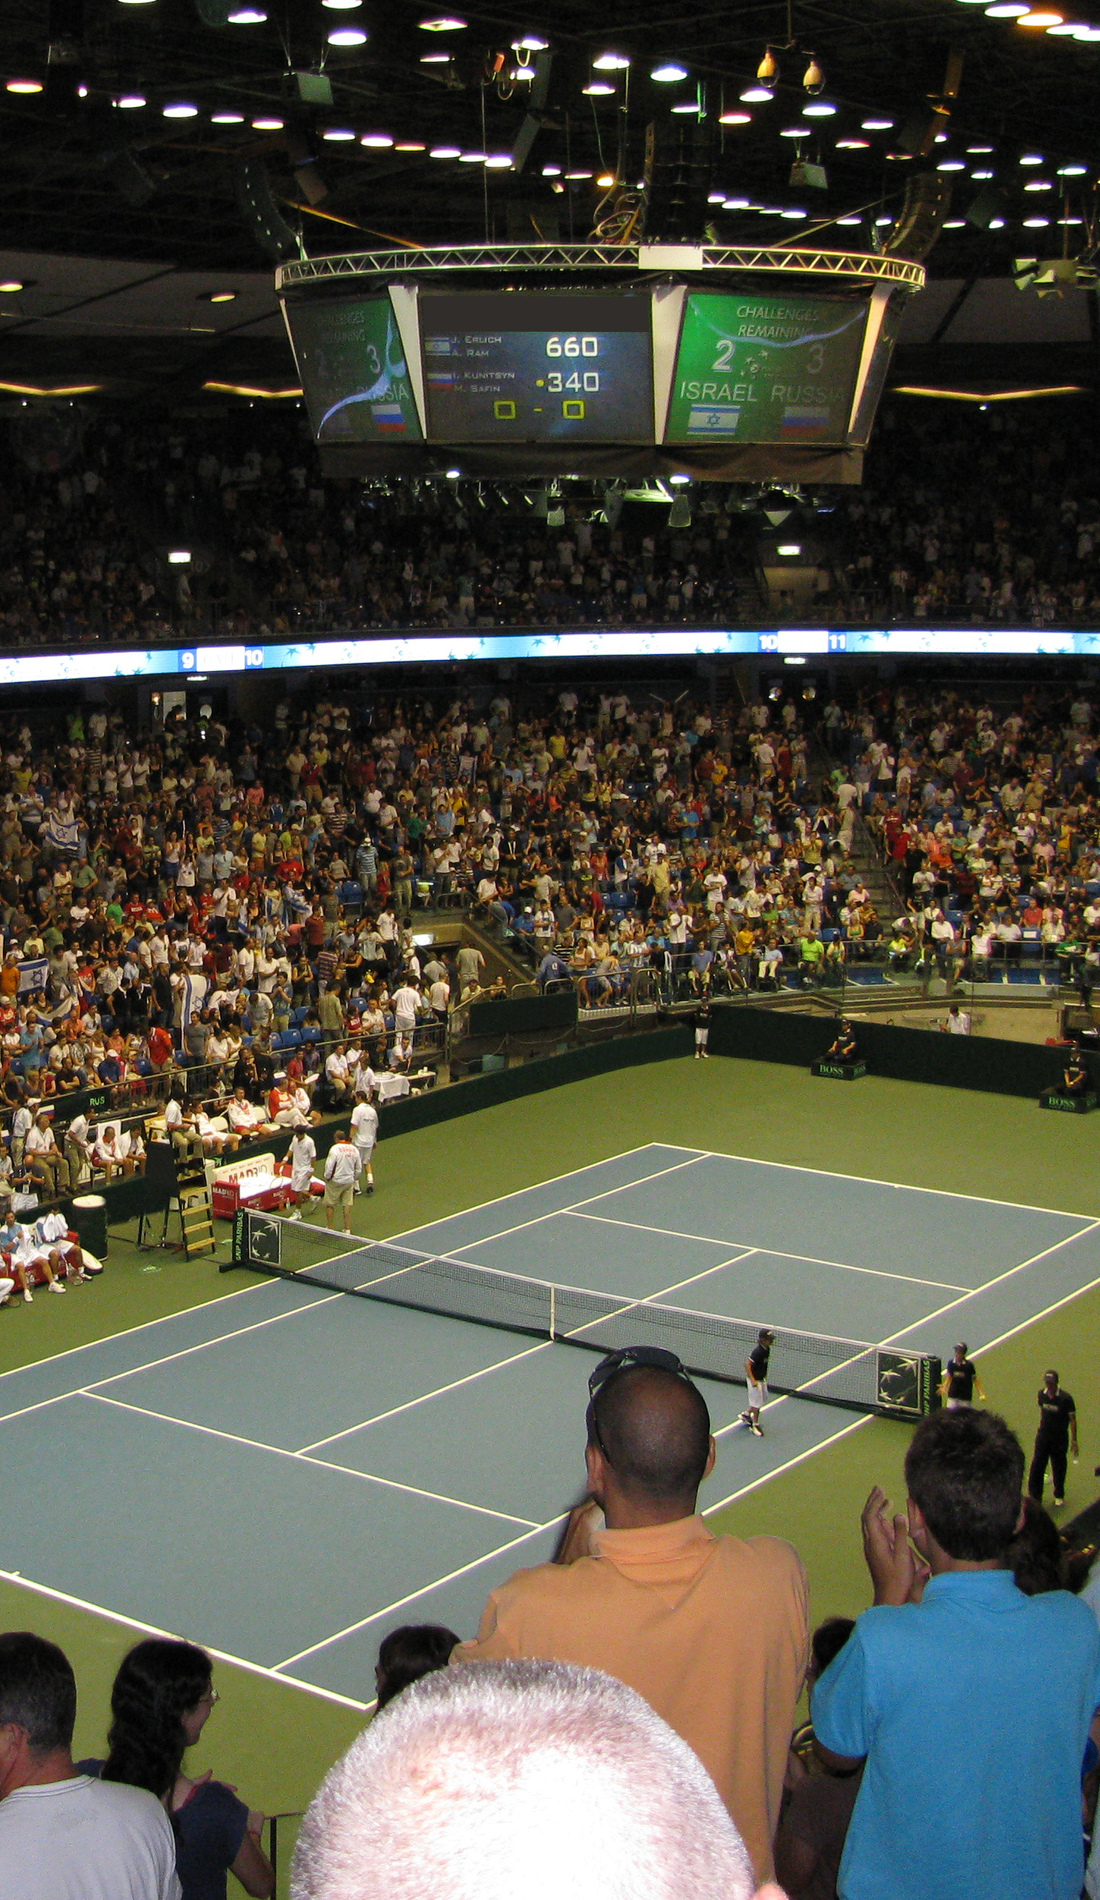 A Davis Cup live event